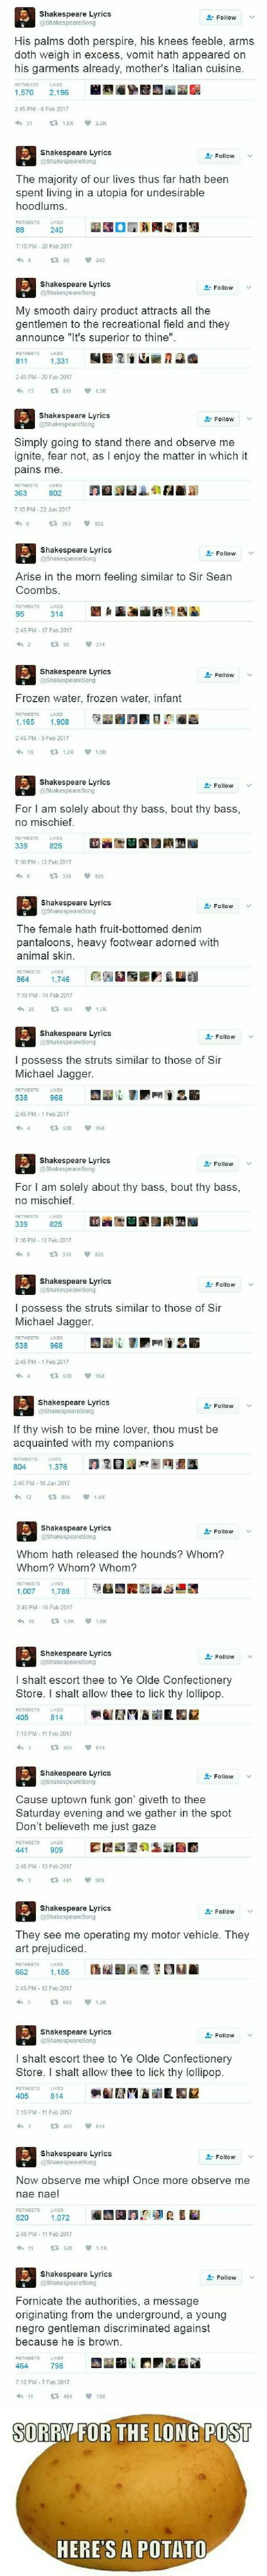 shakespeare memes lyrics